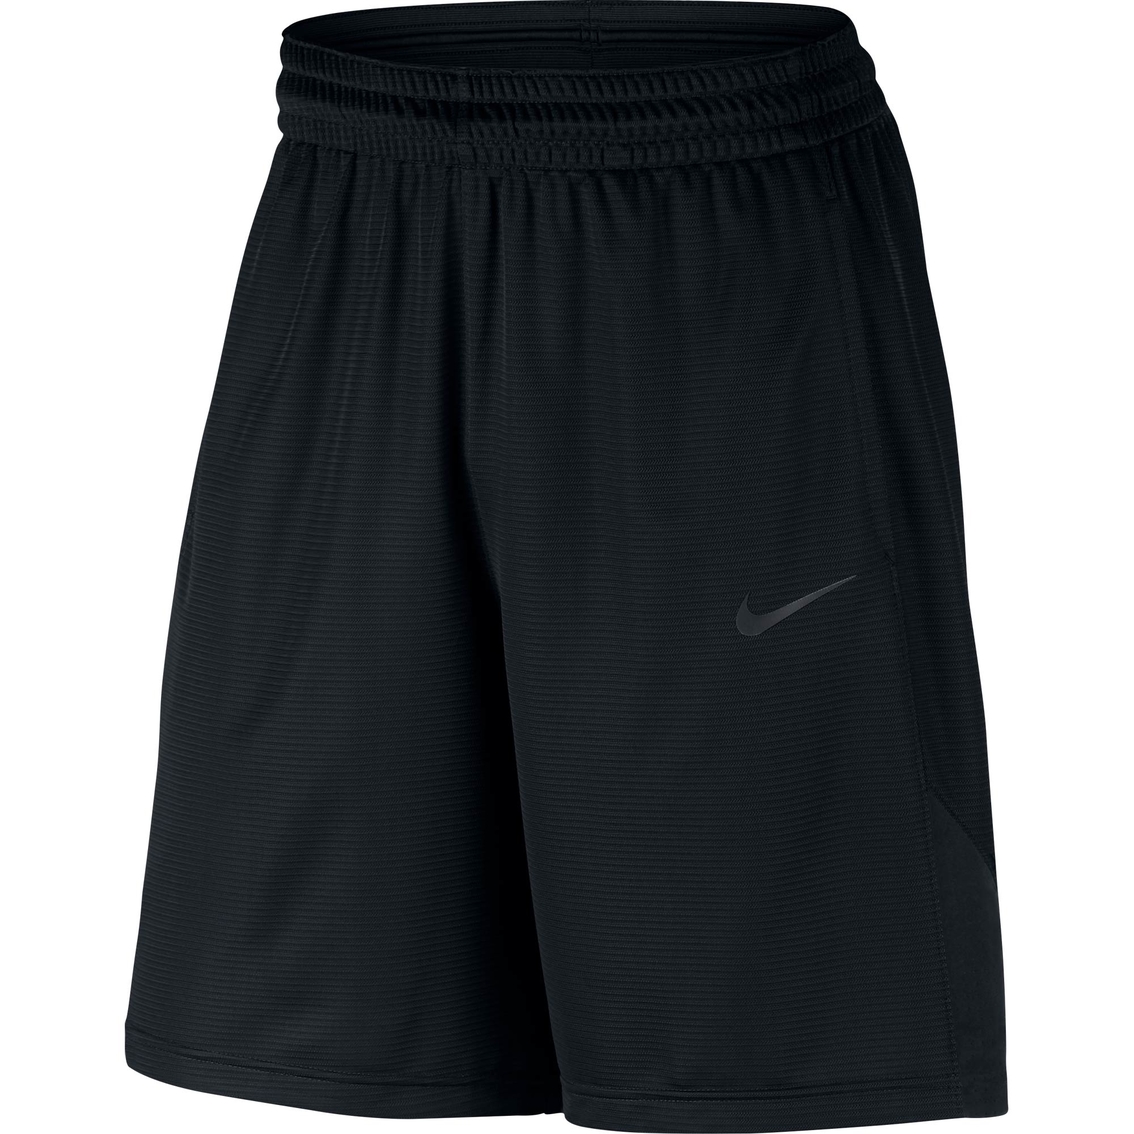 Nike Men's Fastbreak Basketball Shorts | Shorts | Clothing ...